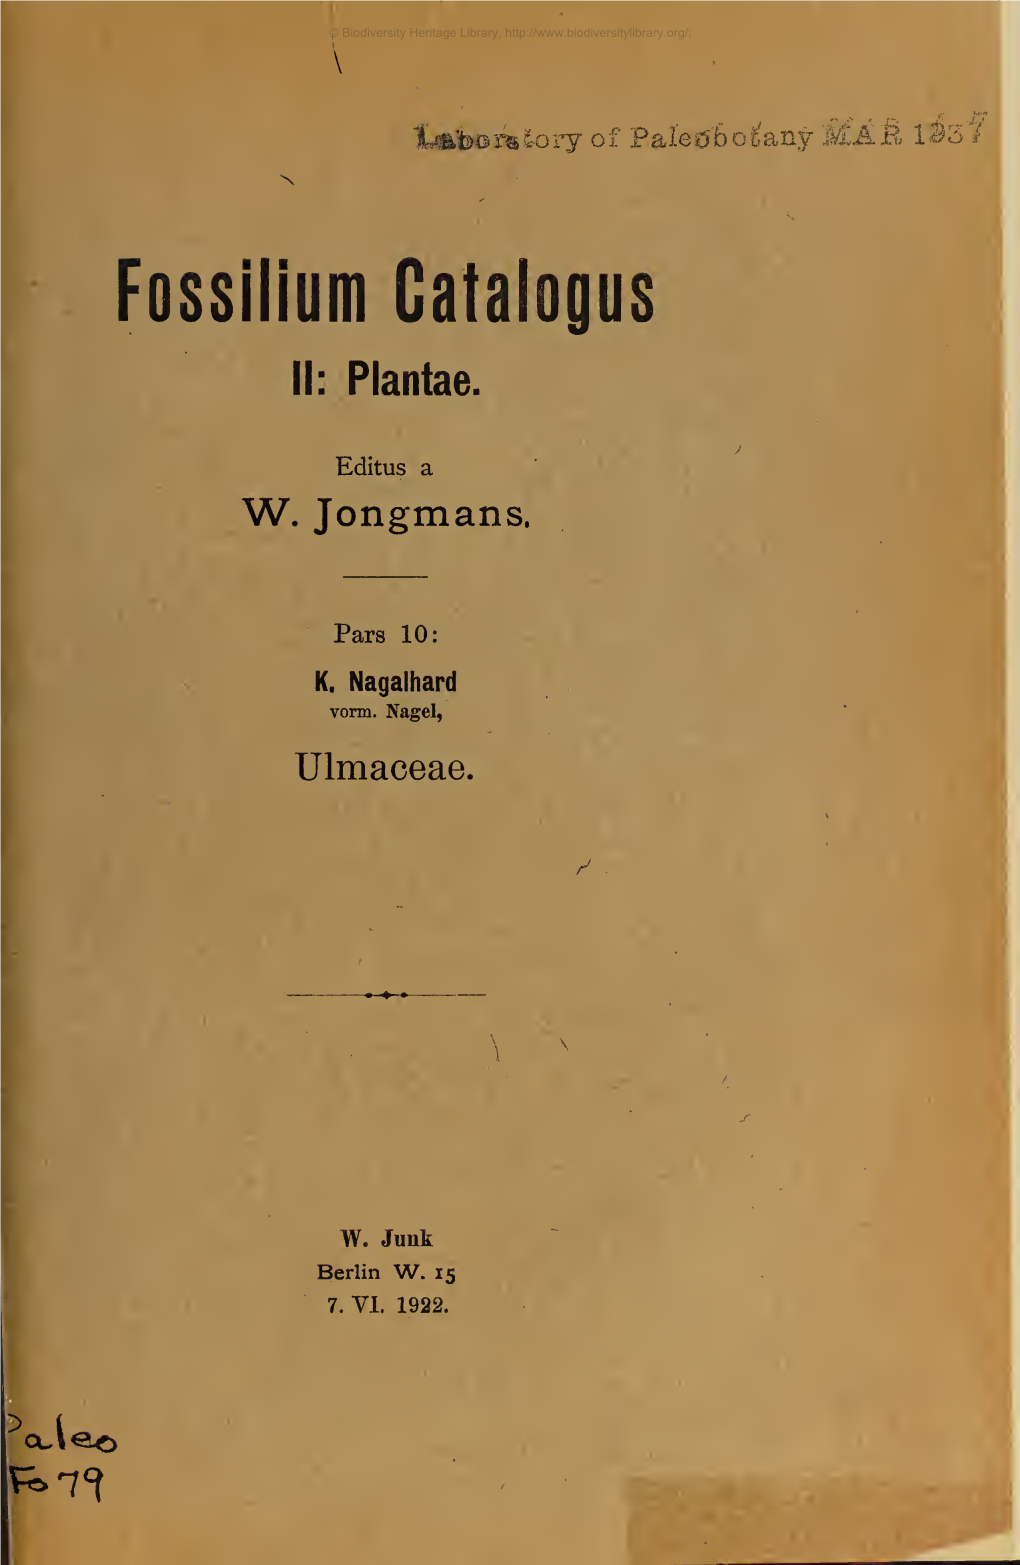 Fossilium Catalogus II: Plantae